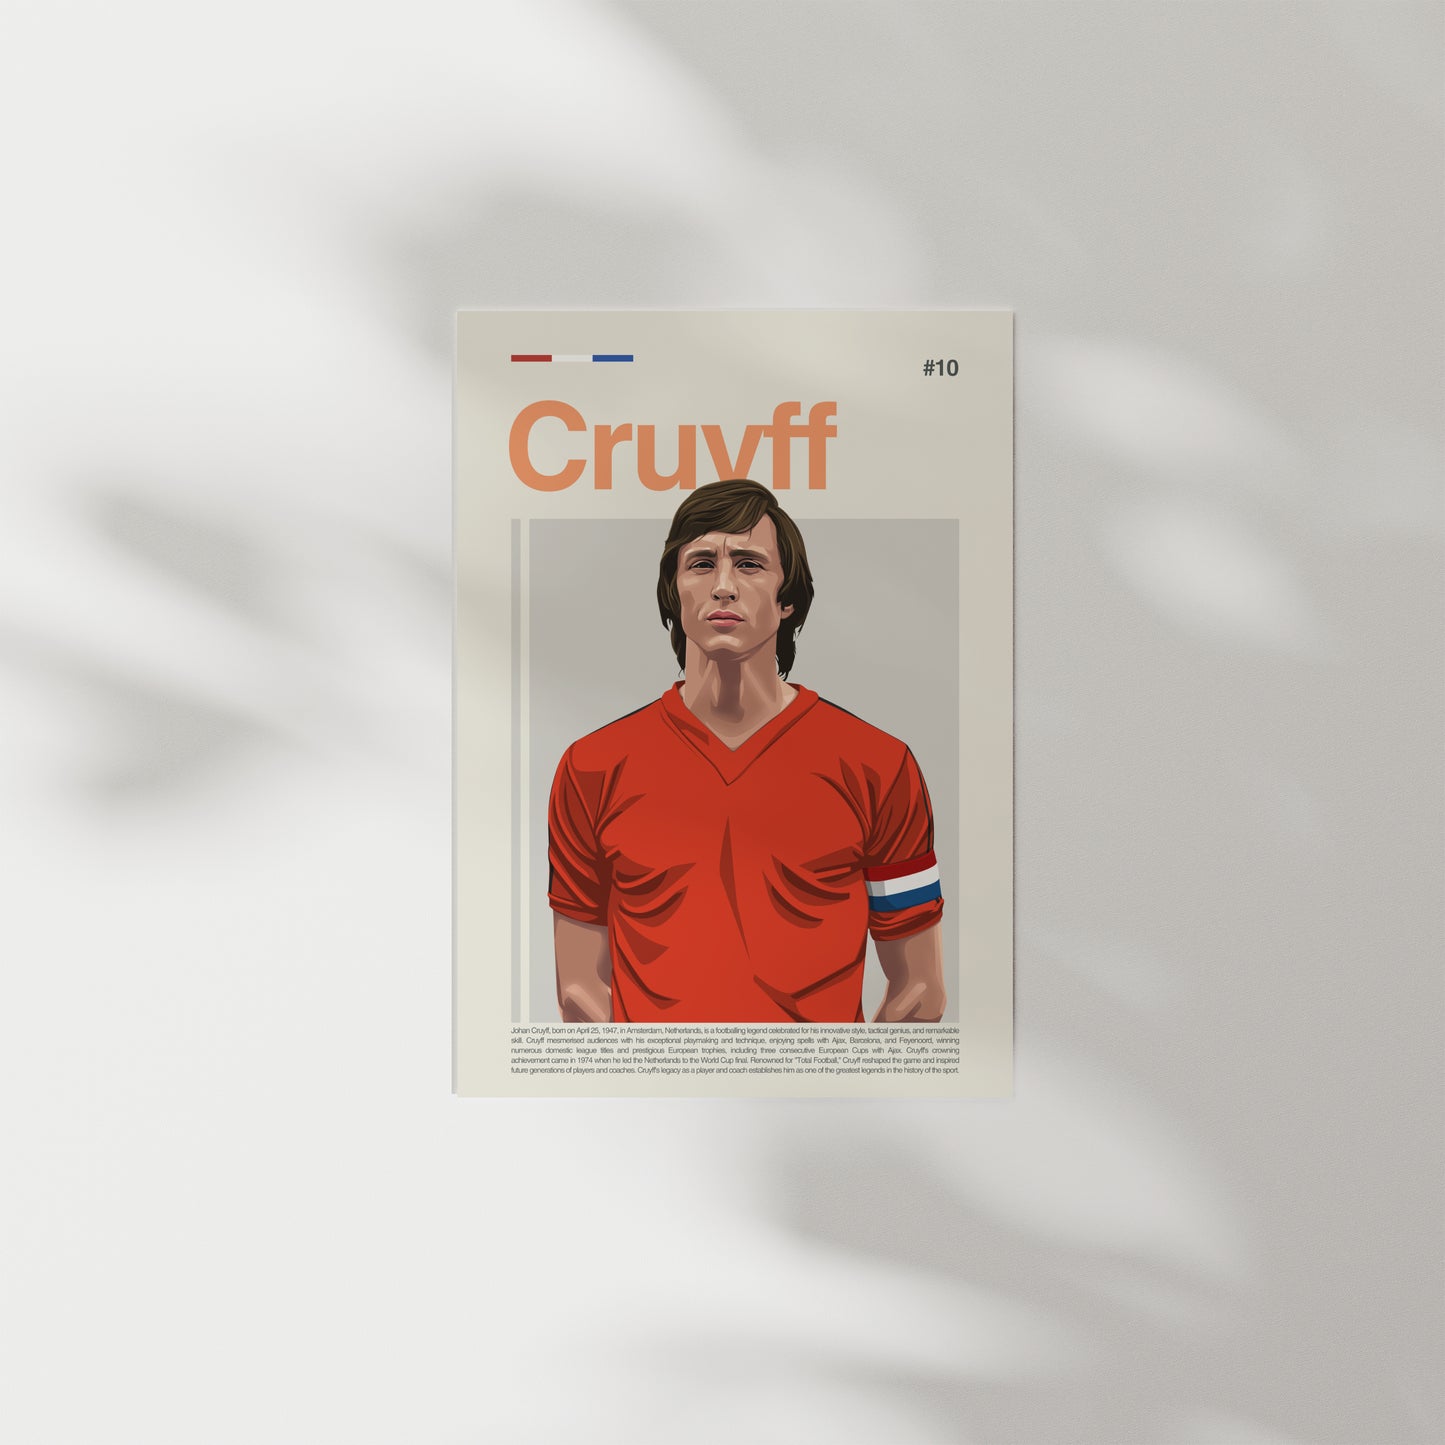 Johan Cruyff Netherlands Print